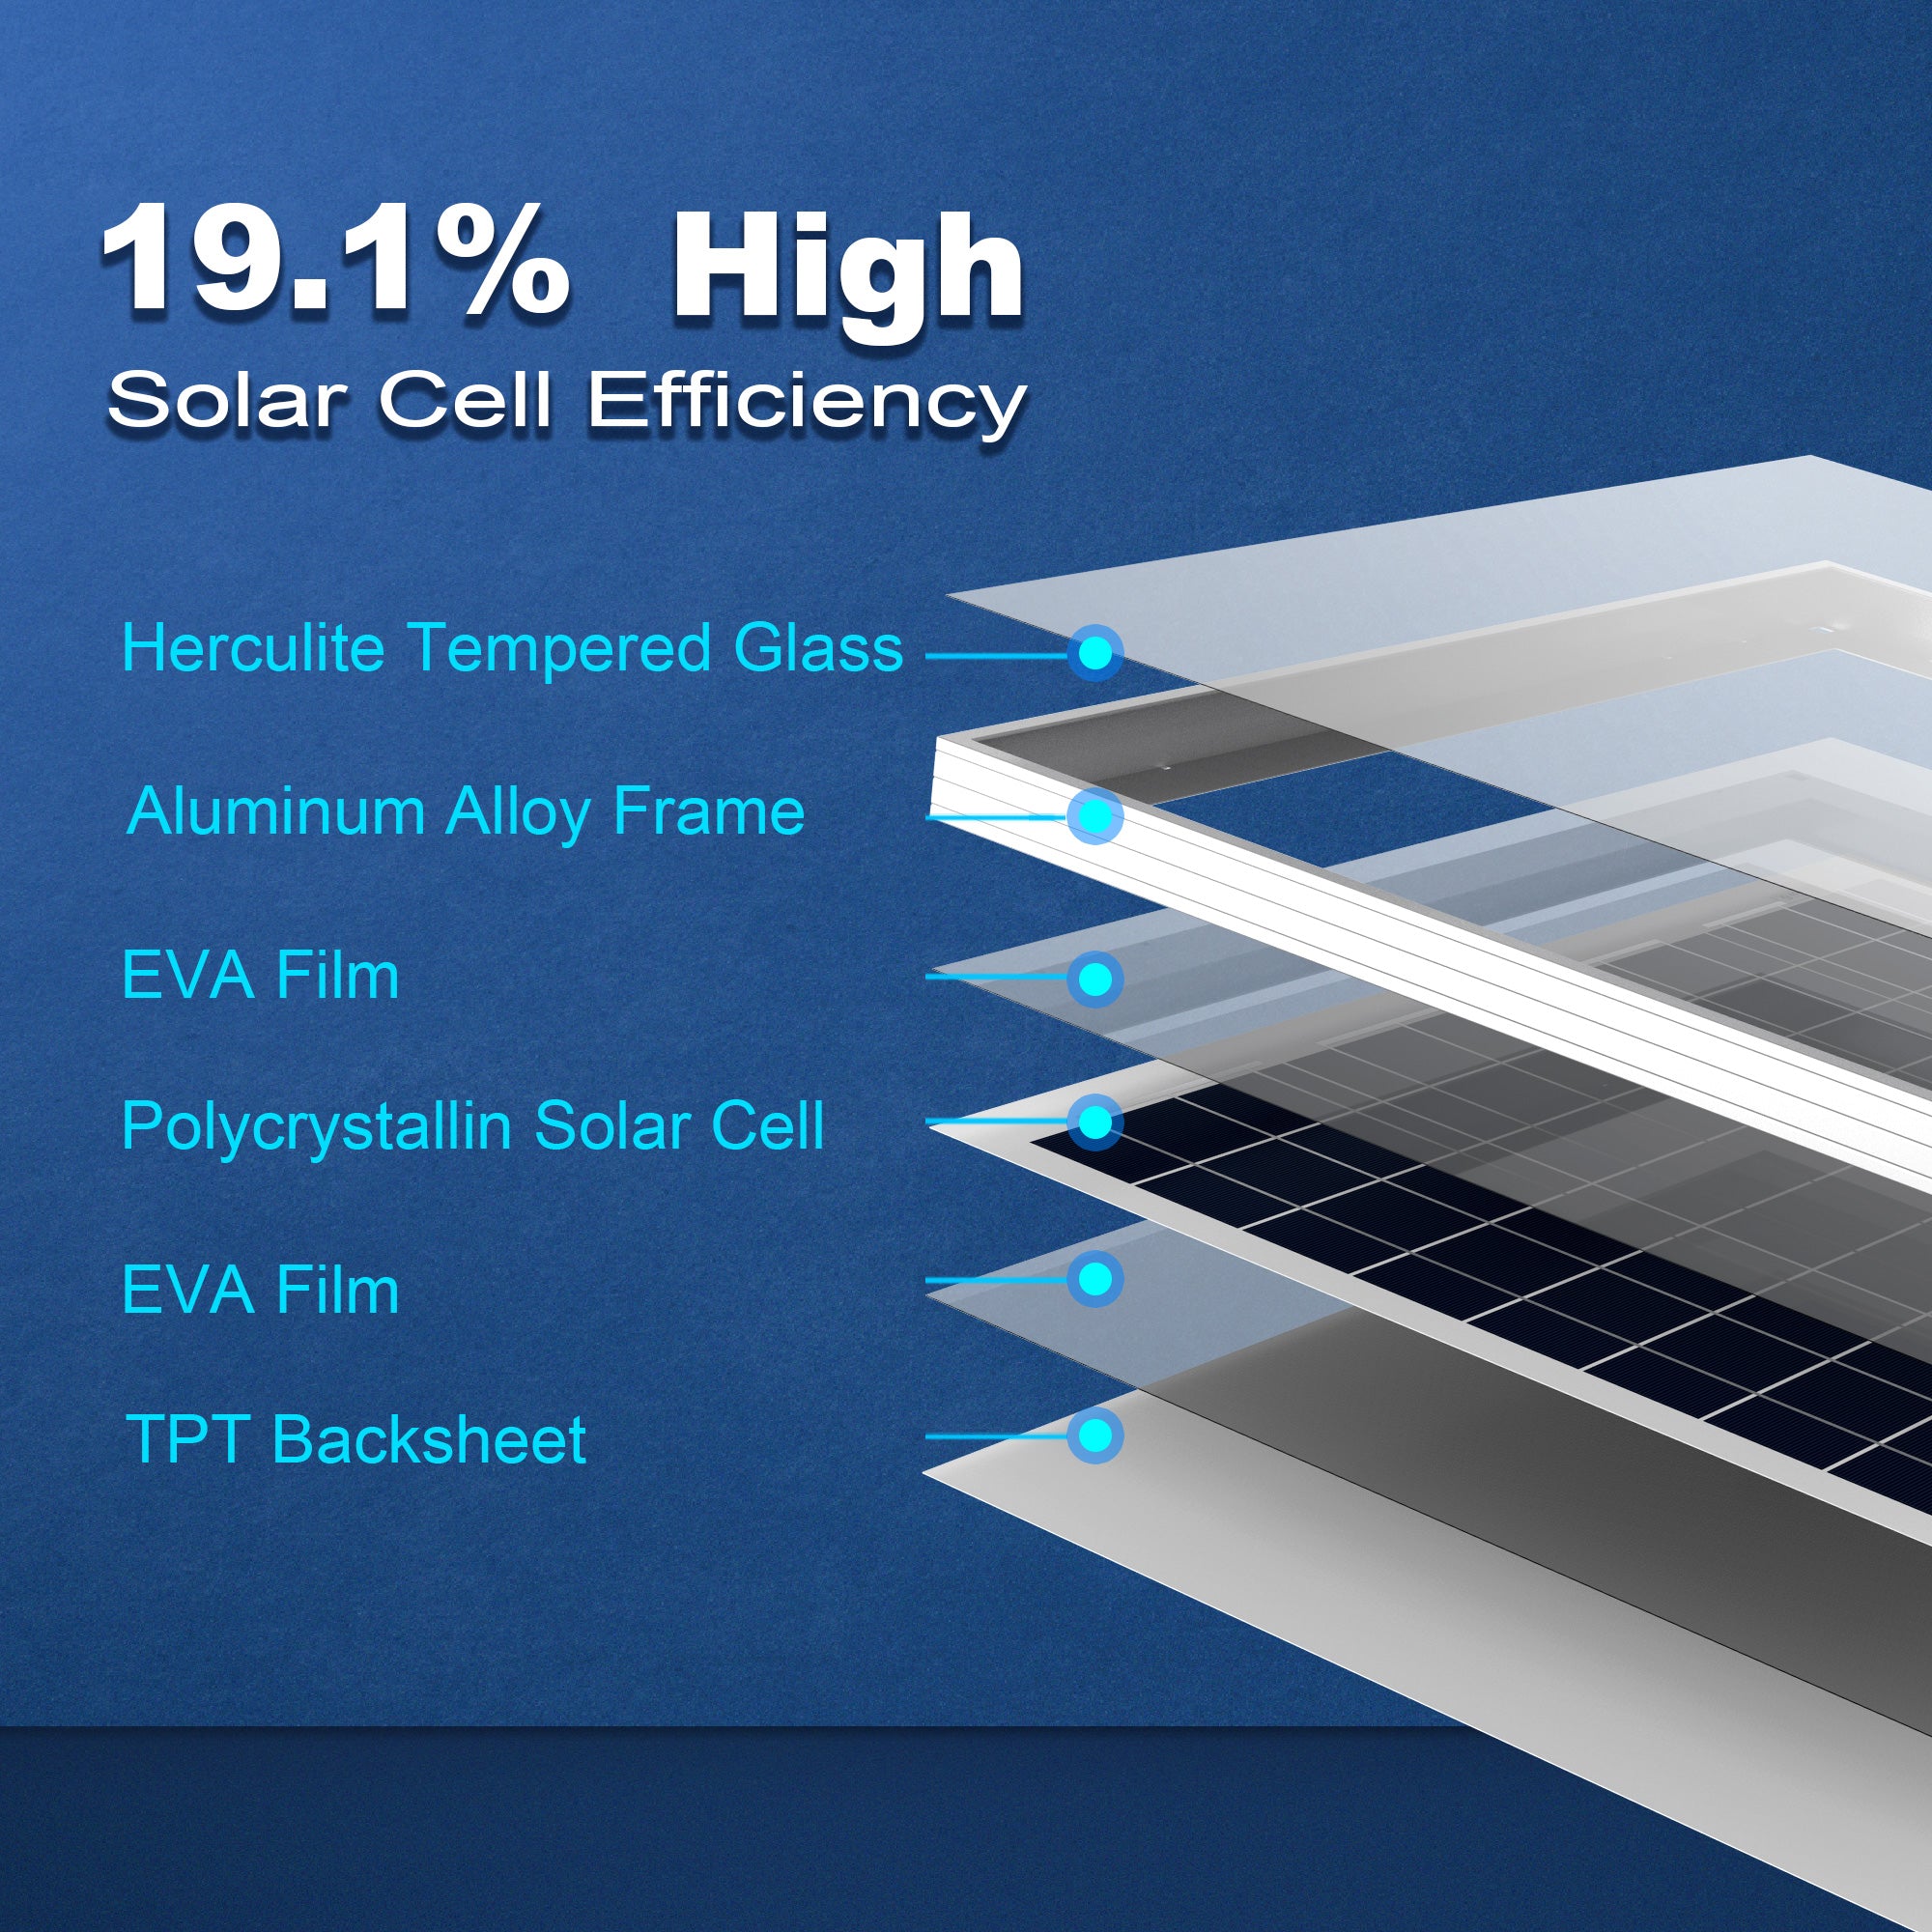 ACOPower 50W Mono Solar Panel for 12V Battery Charging